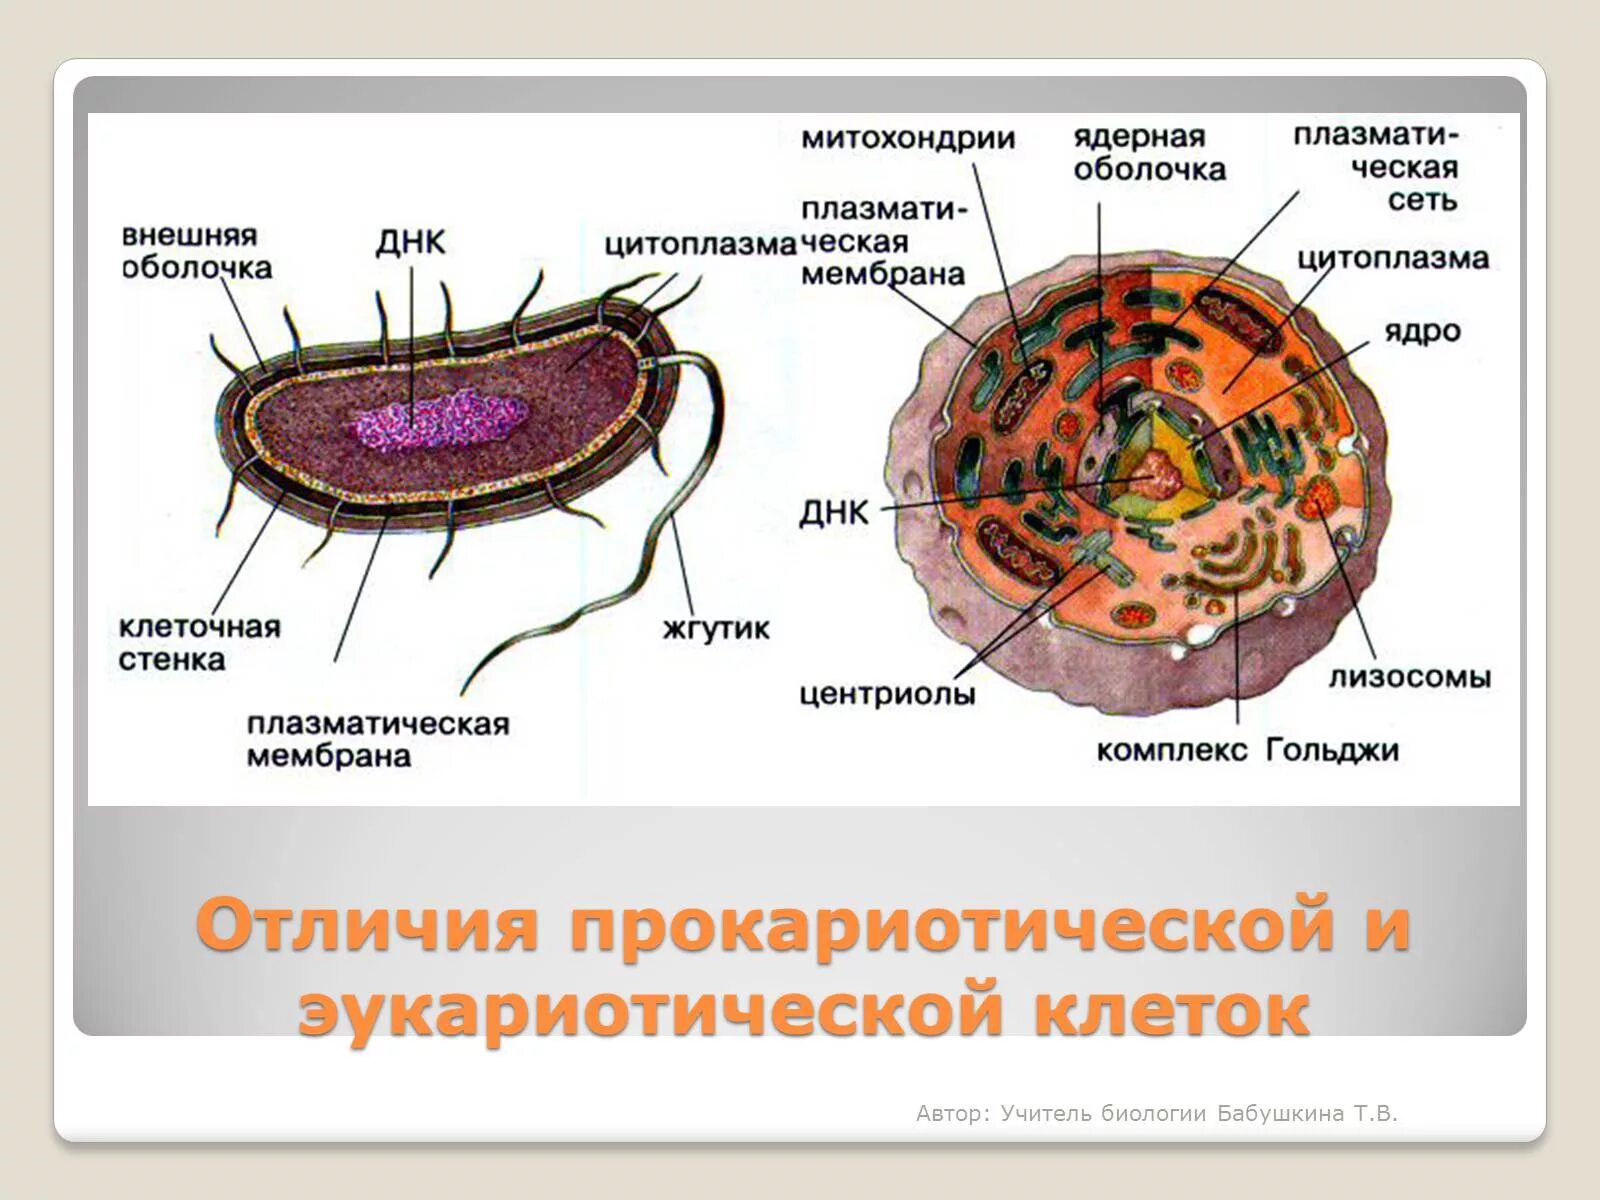 Строение бактерии прокариот. Строение бактериальной клетки прокариот. Прокариотическая клетка bacteria. Строение клетки прокариот бактерии. Клетки прокариот имеют ядро